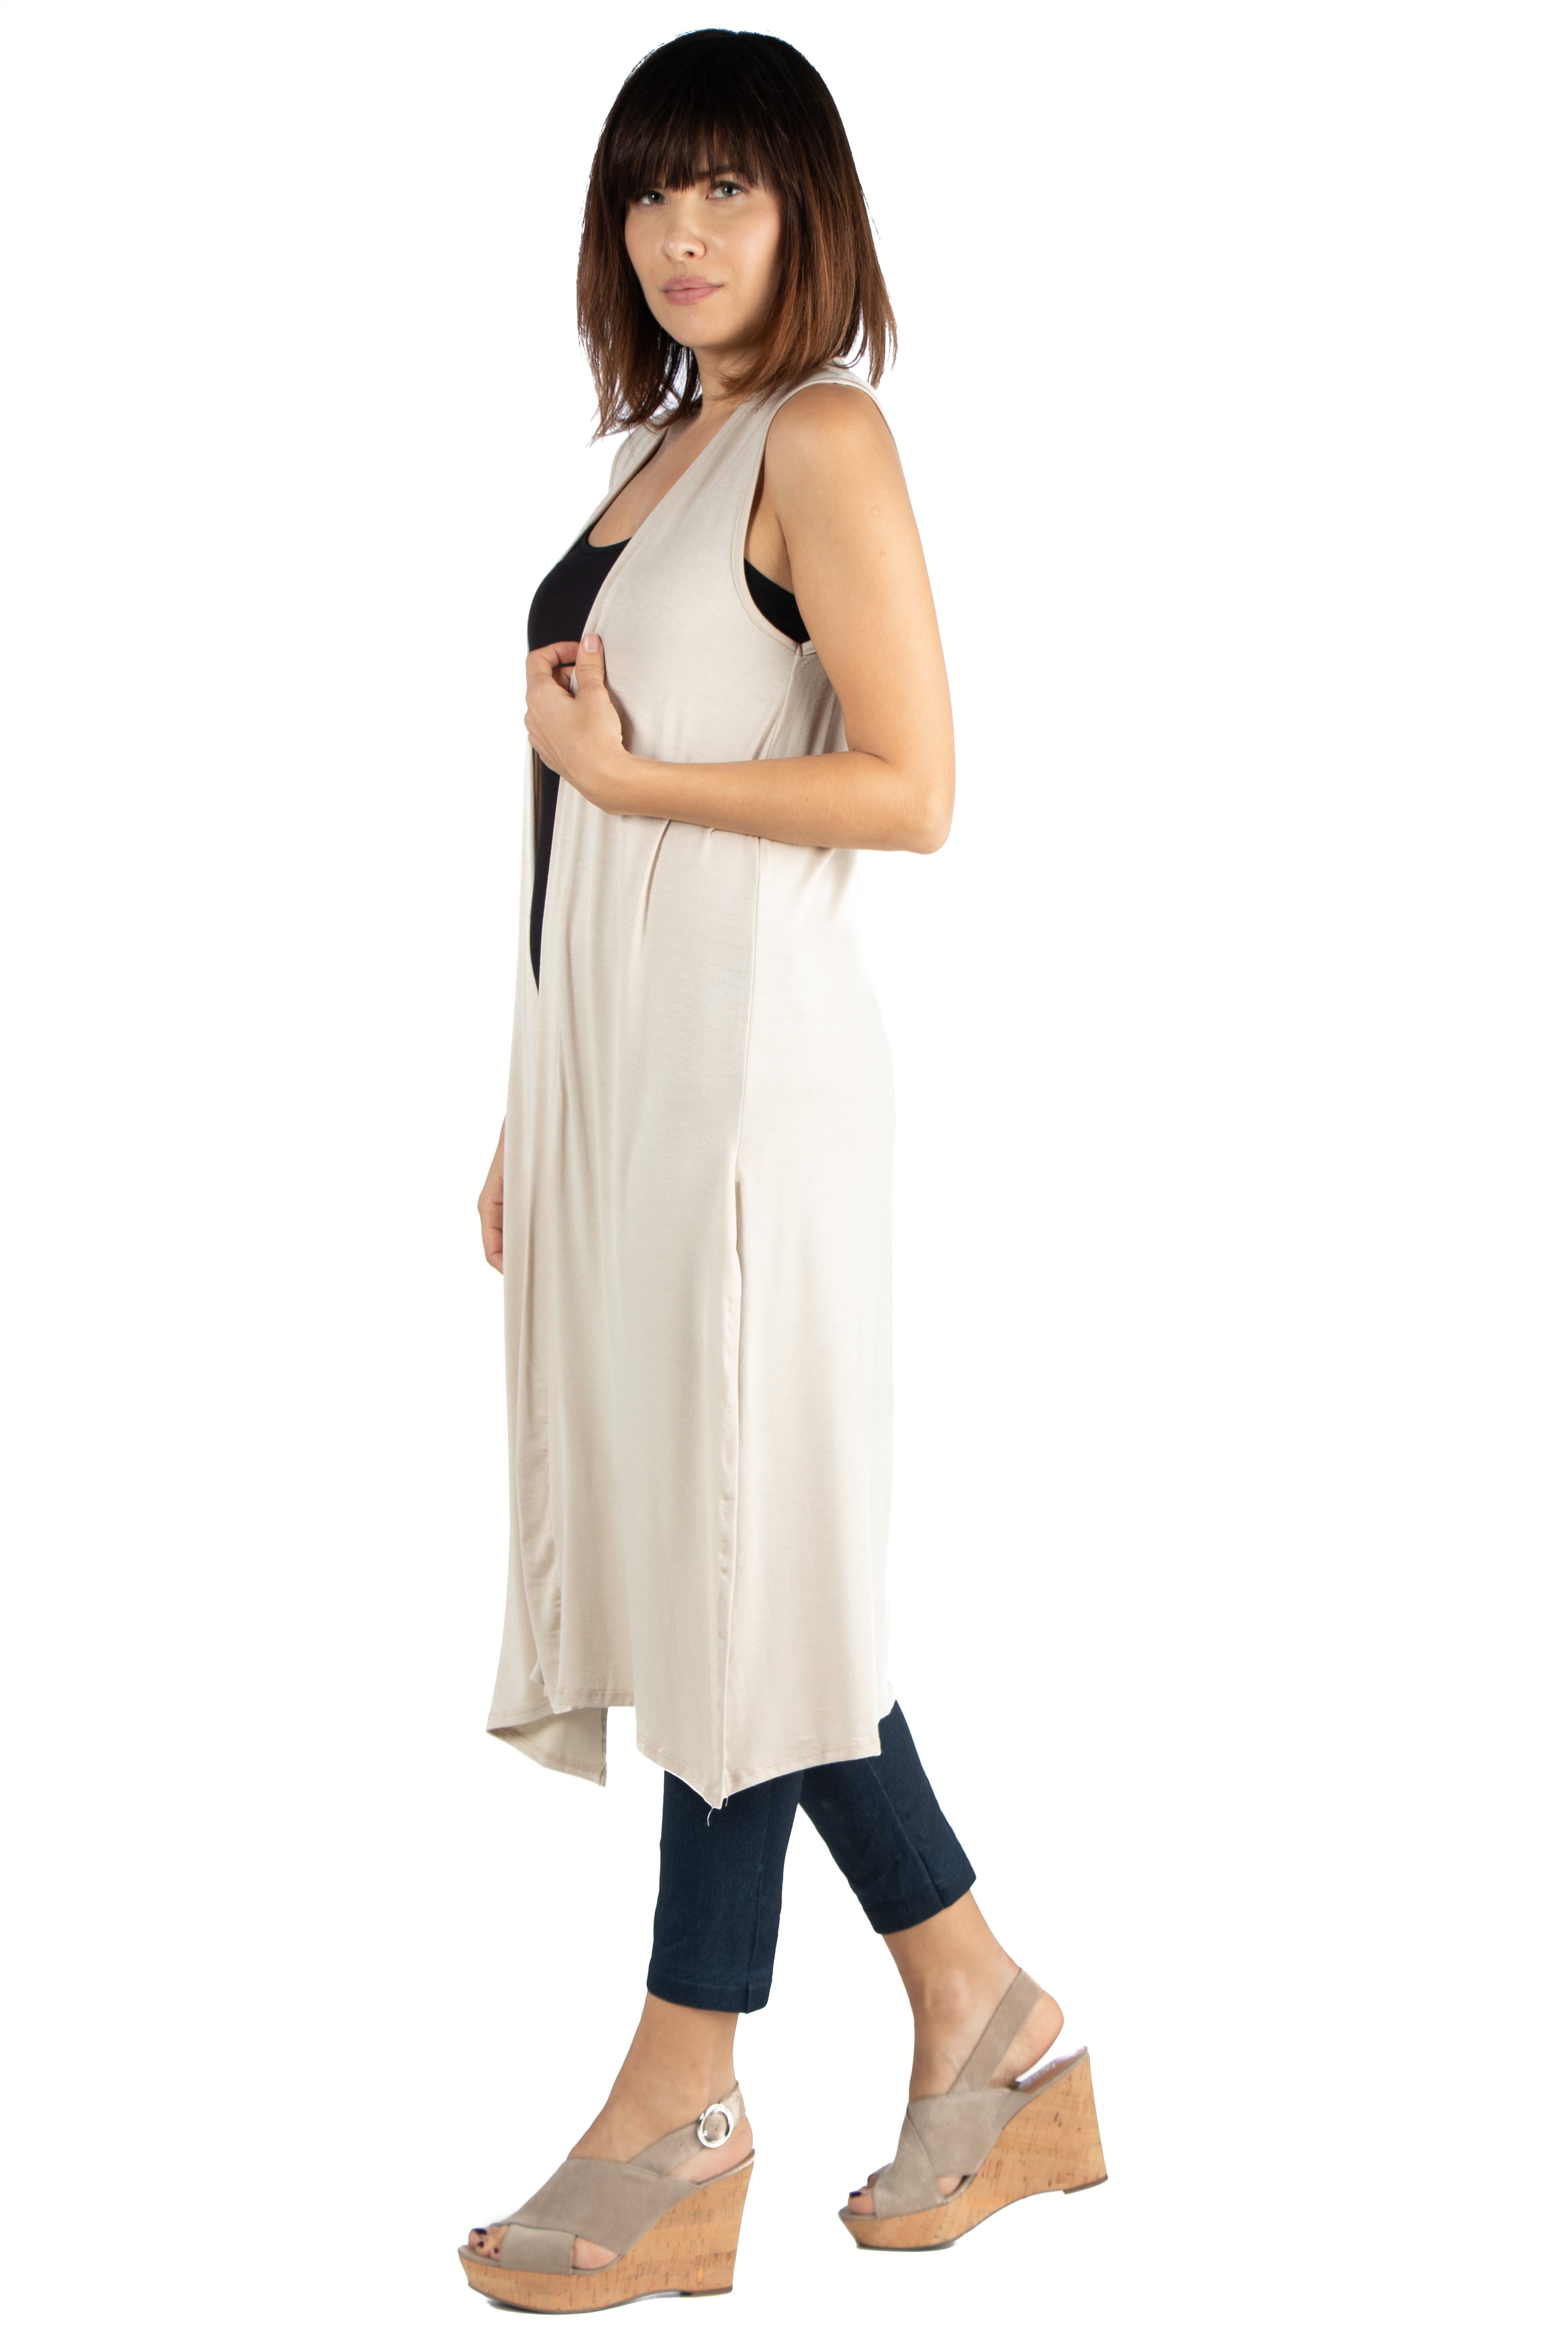 24/7 Comfort Apparel Women's Plus Size Long Sleeveless Cardigan Vest